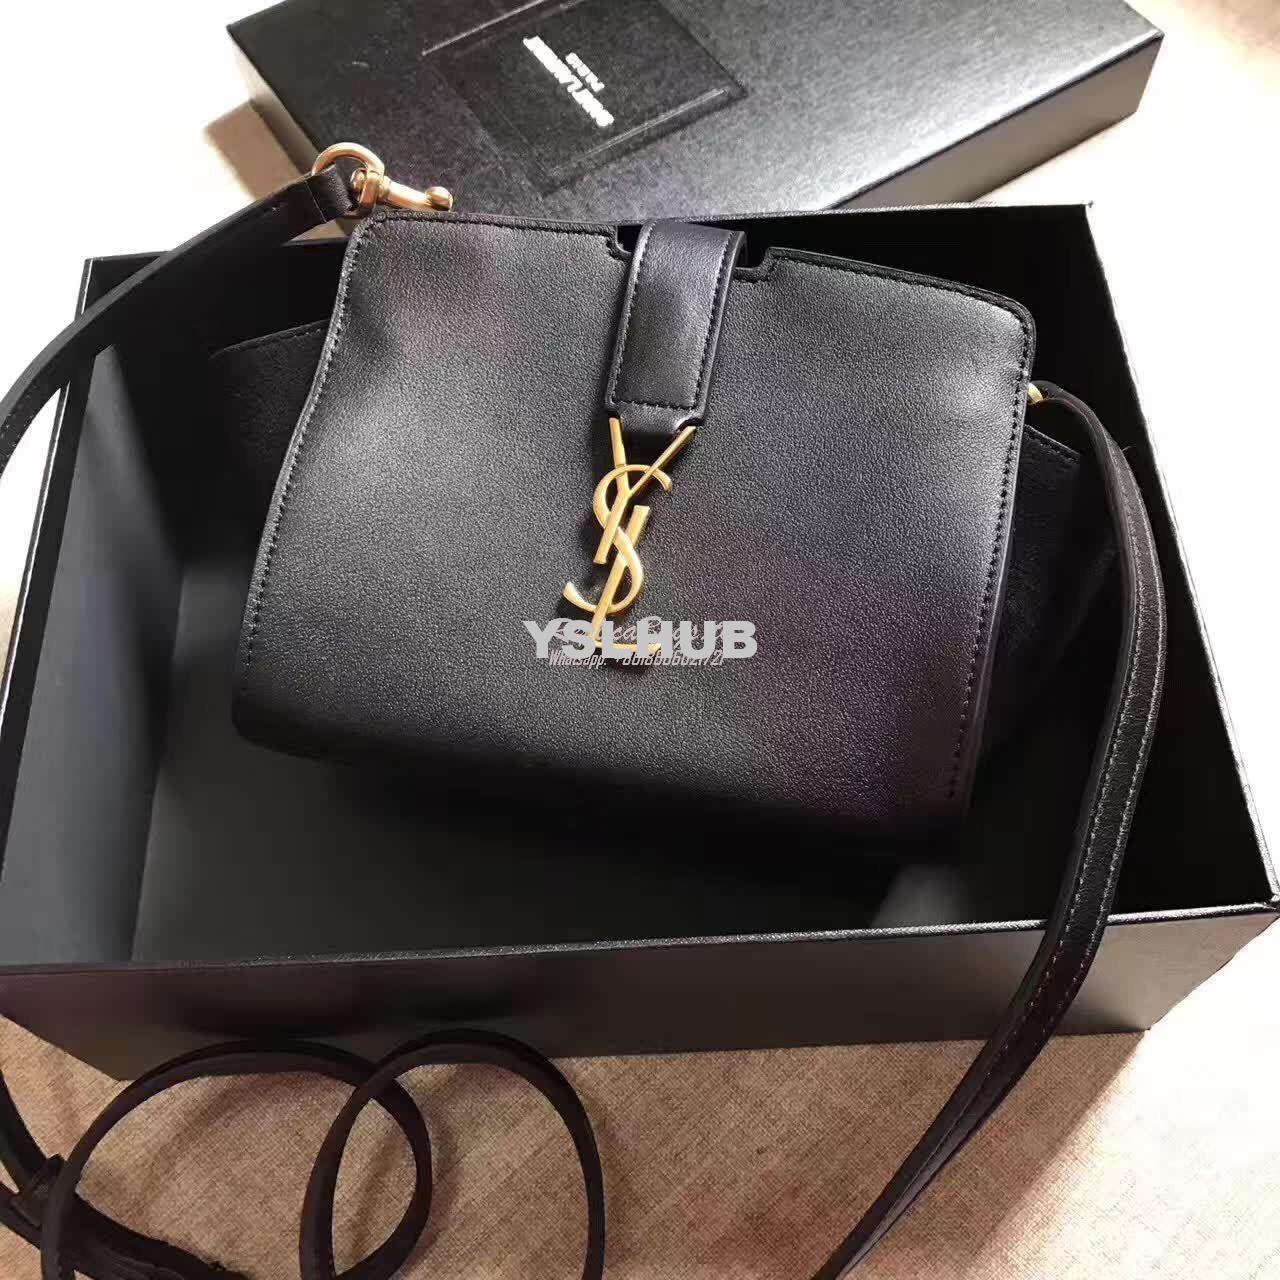 Replica YSL Yves Saint Laurent Toy Cabas Bag in Black